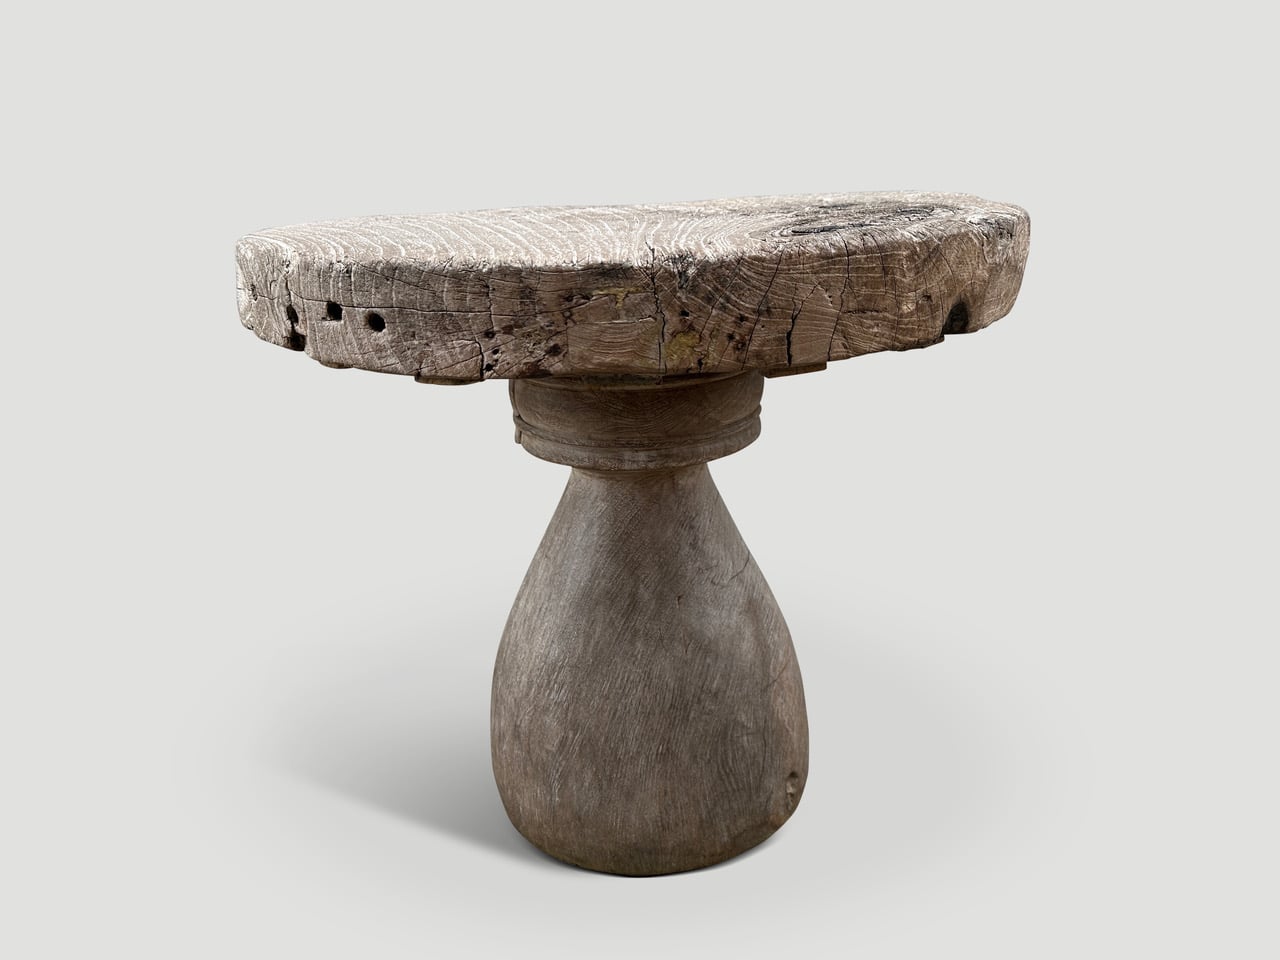 solid teak wood century old round side table